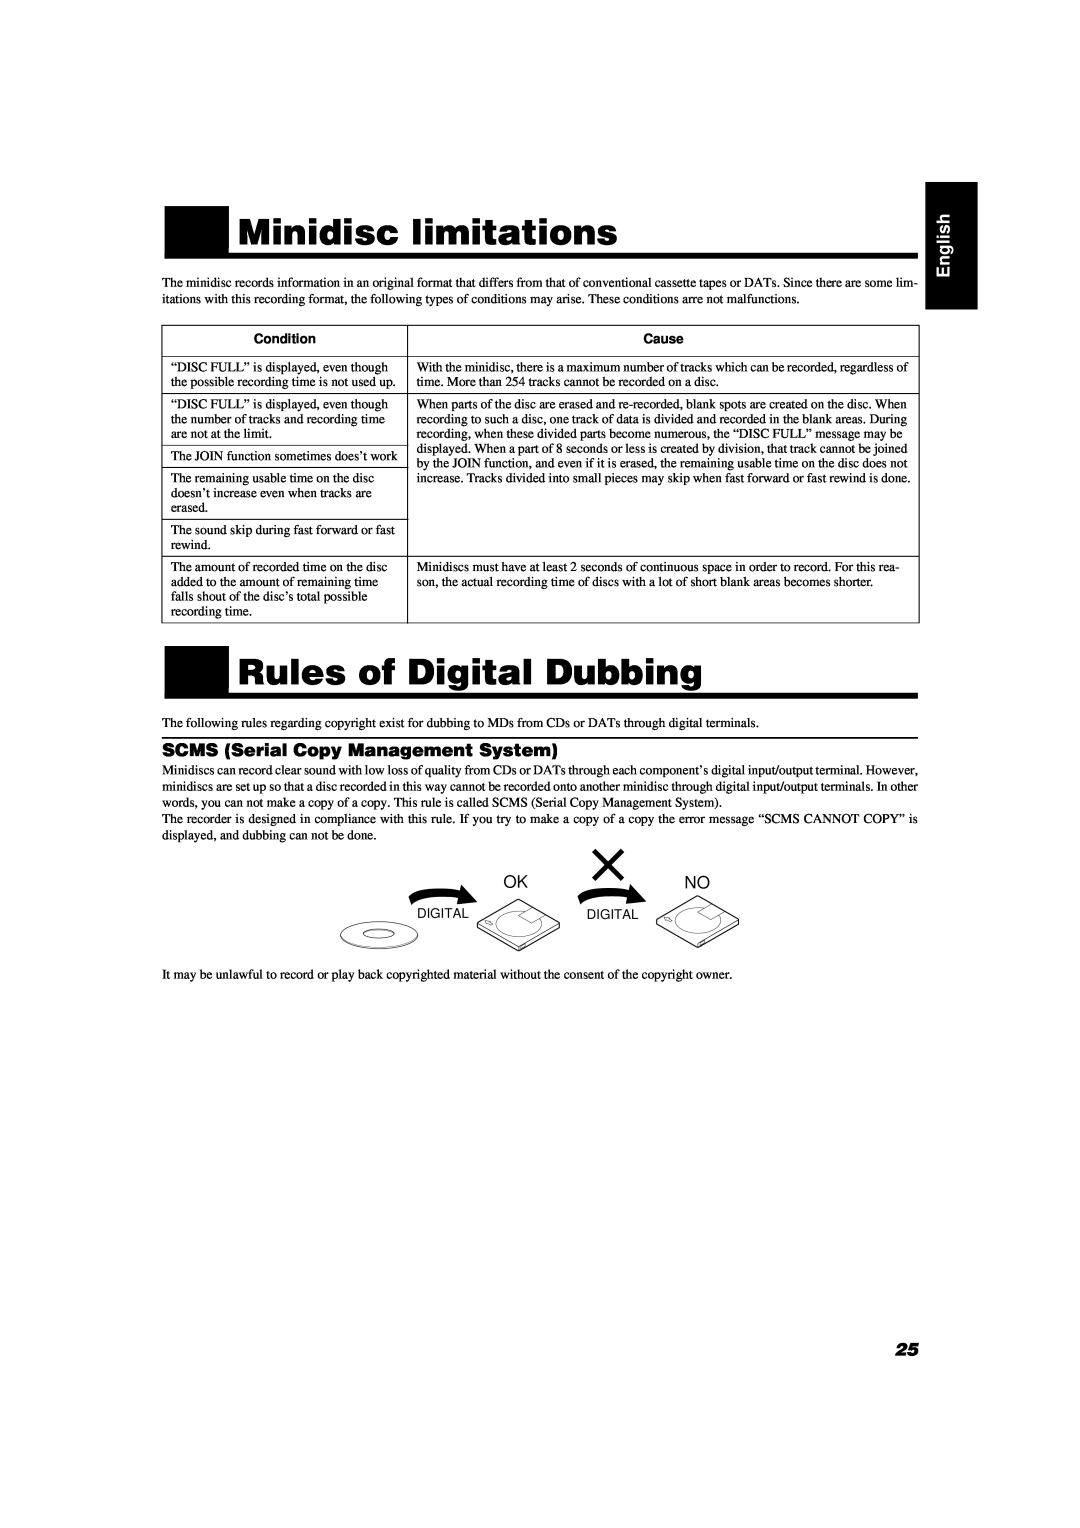 JVC UX-MD9000R manual Minidisc limitations, Rules of Digital Dubbing, SCMS Serial Copy Management System, Okno, English 